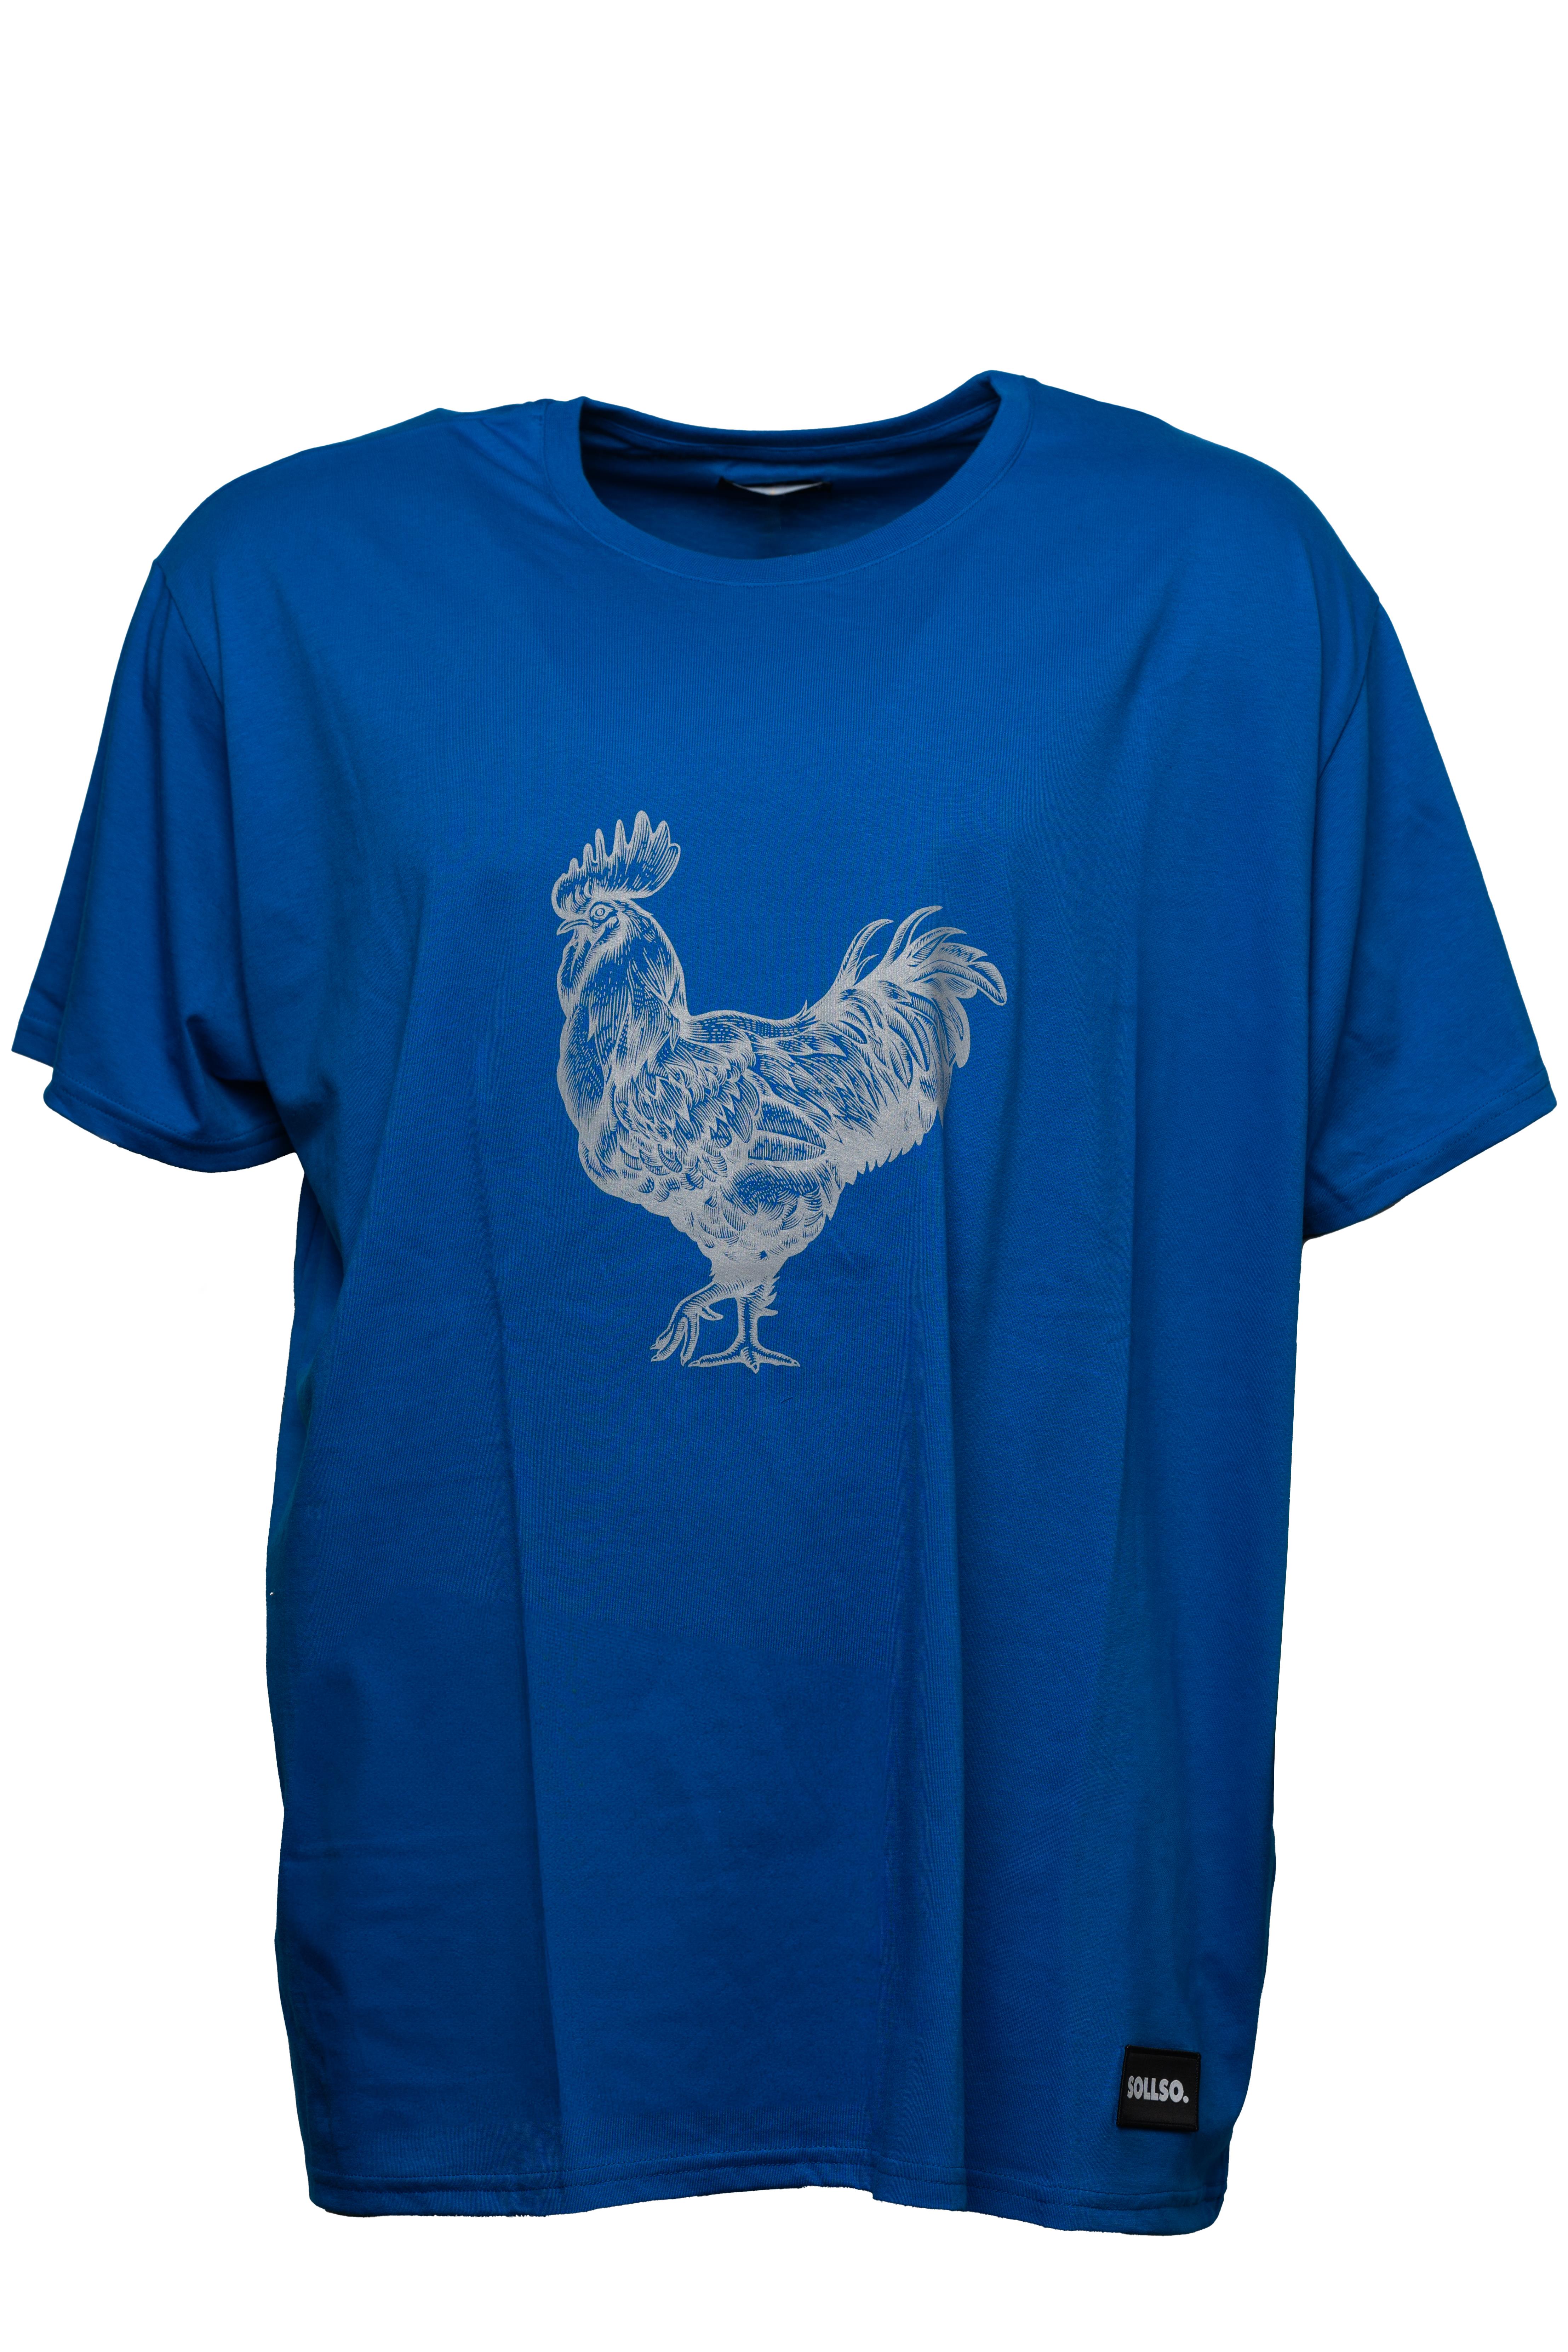 SOLLSO. T-Shirt "Rooster", Farbe Ocean Blue, Größe 3XL